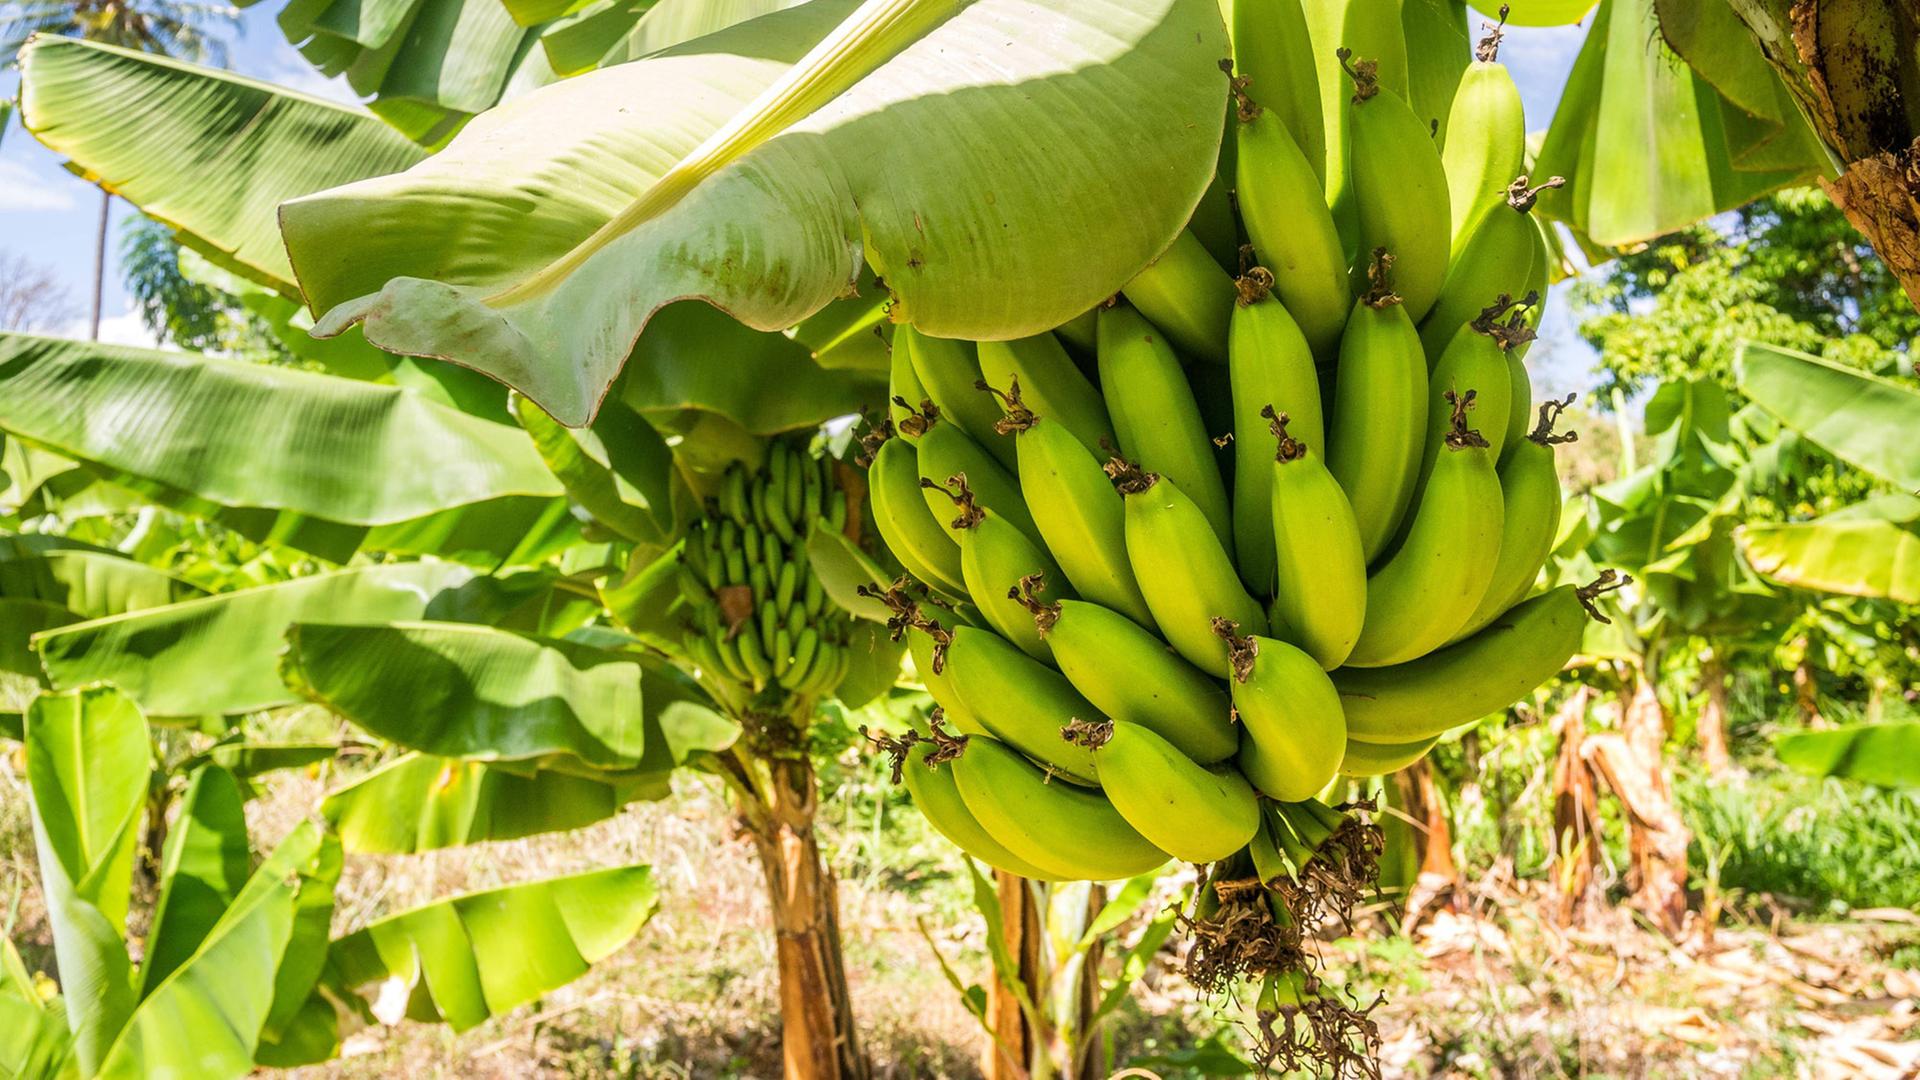 Cavendish Bananenstaude auf der Plantage, Taveta, Kenia, Afrika